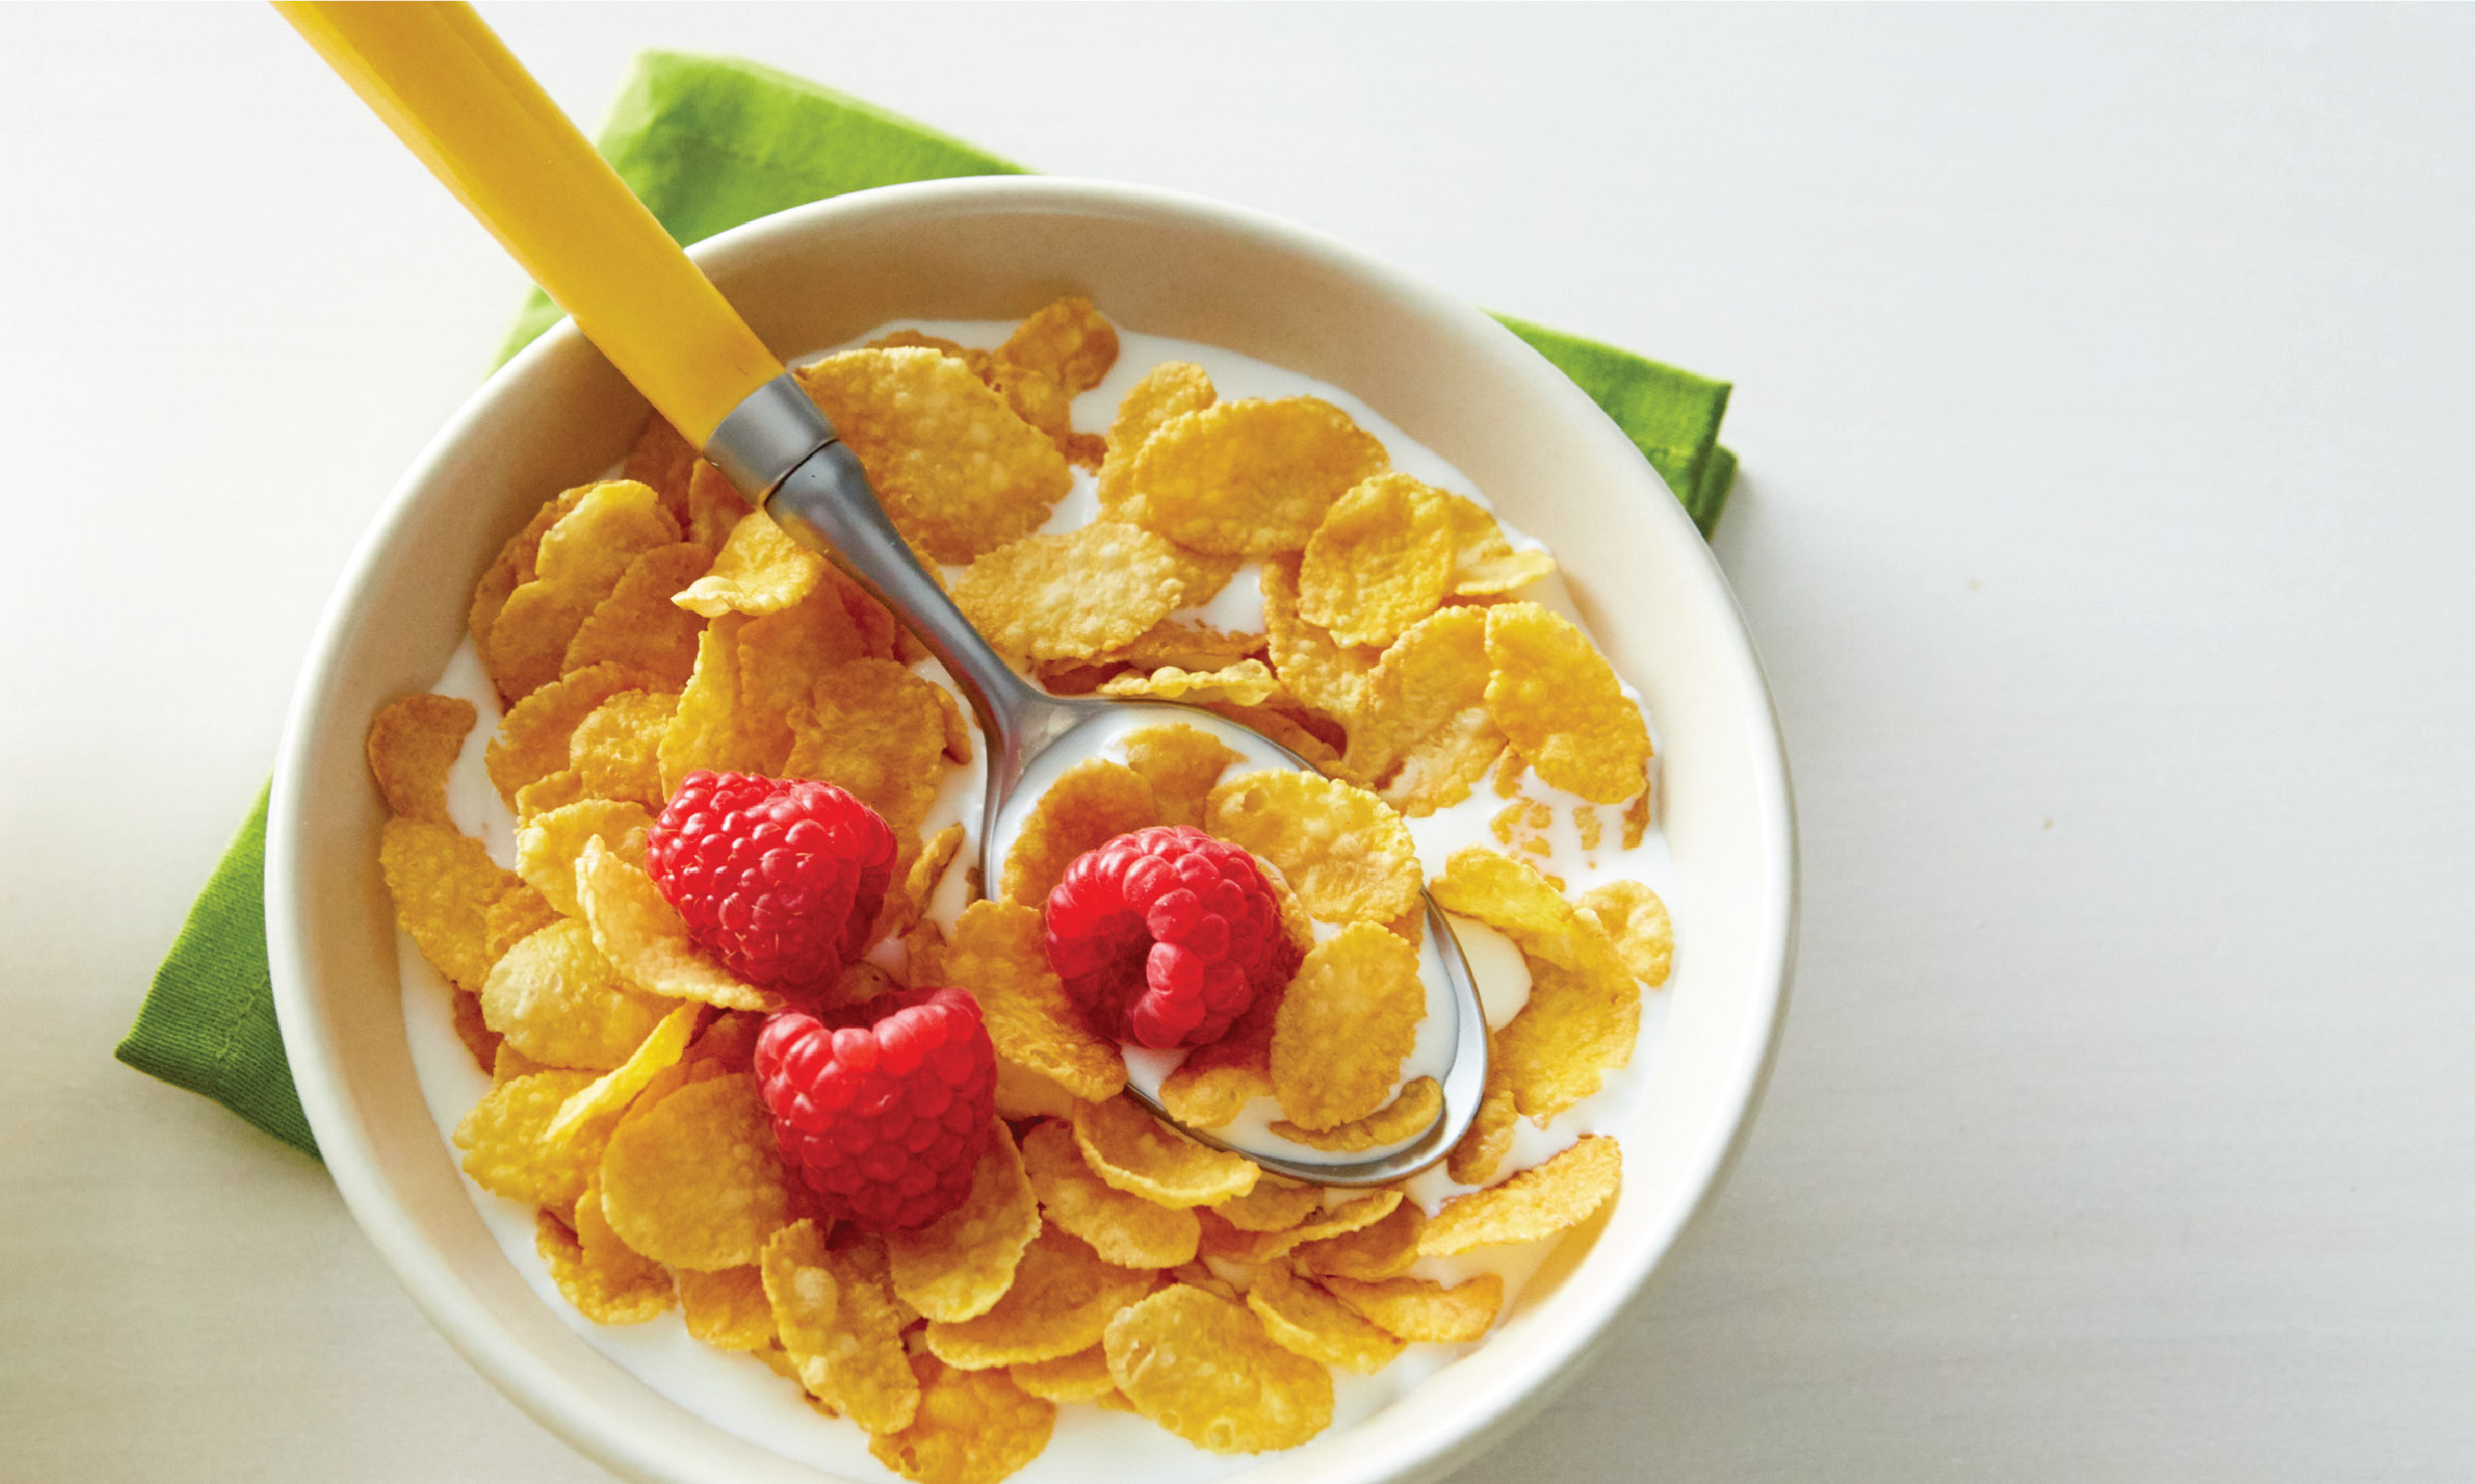 https://www.zionmarketresearch.com/report/cereal-ingredients-market